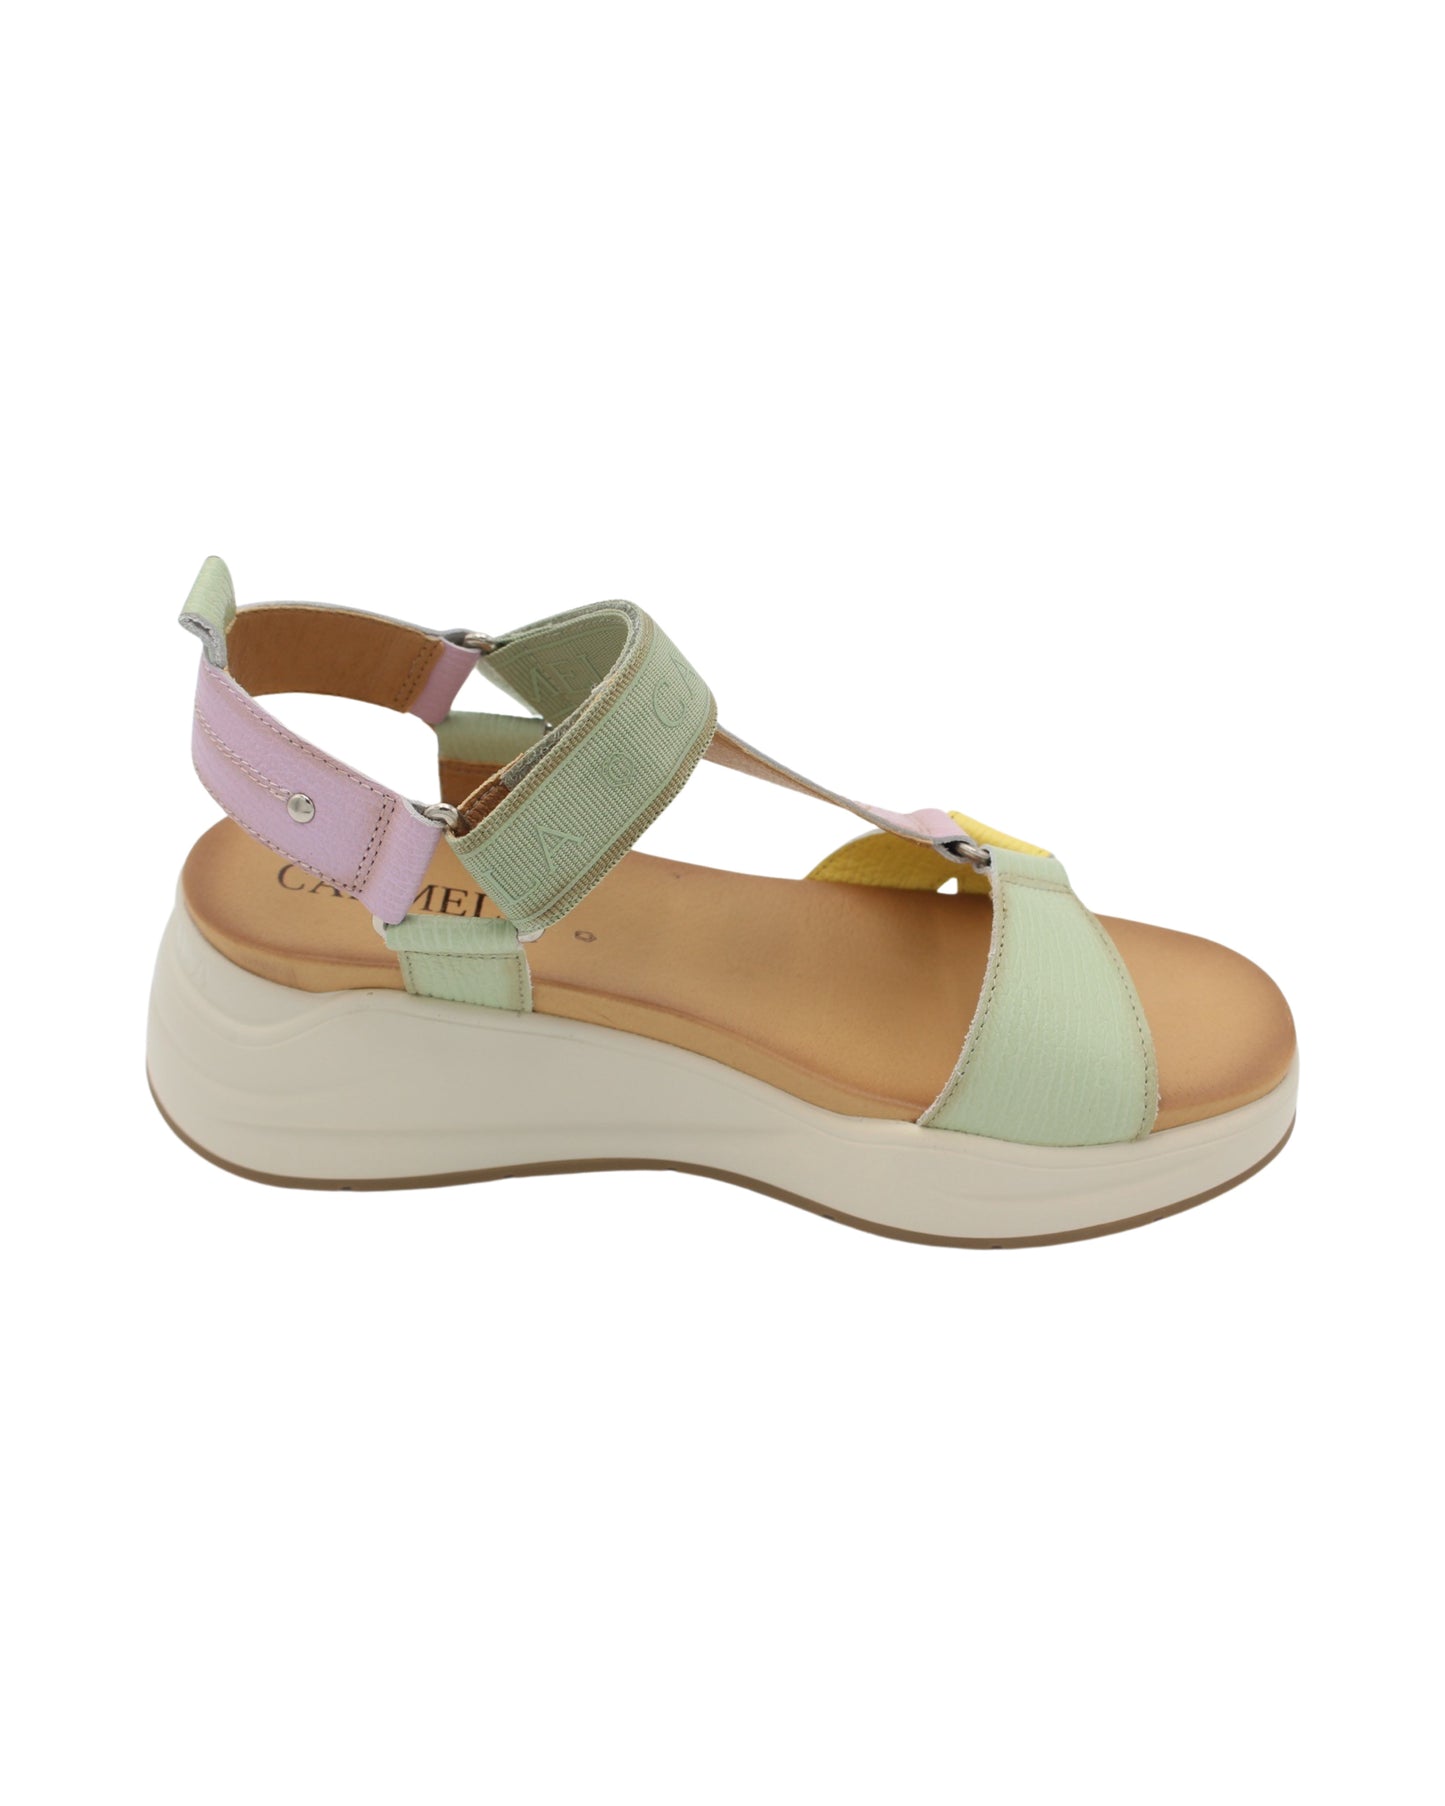 Carmela - Ladies Shoes Sandals Green, lilac, Yellow (2417)